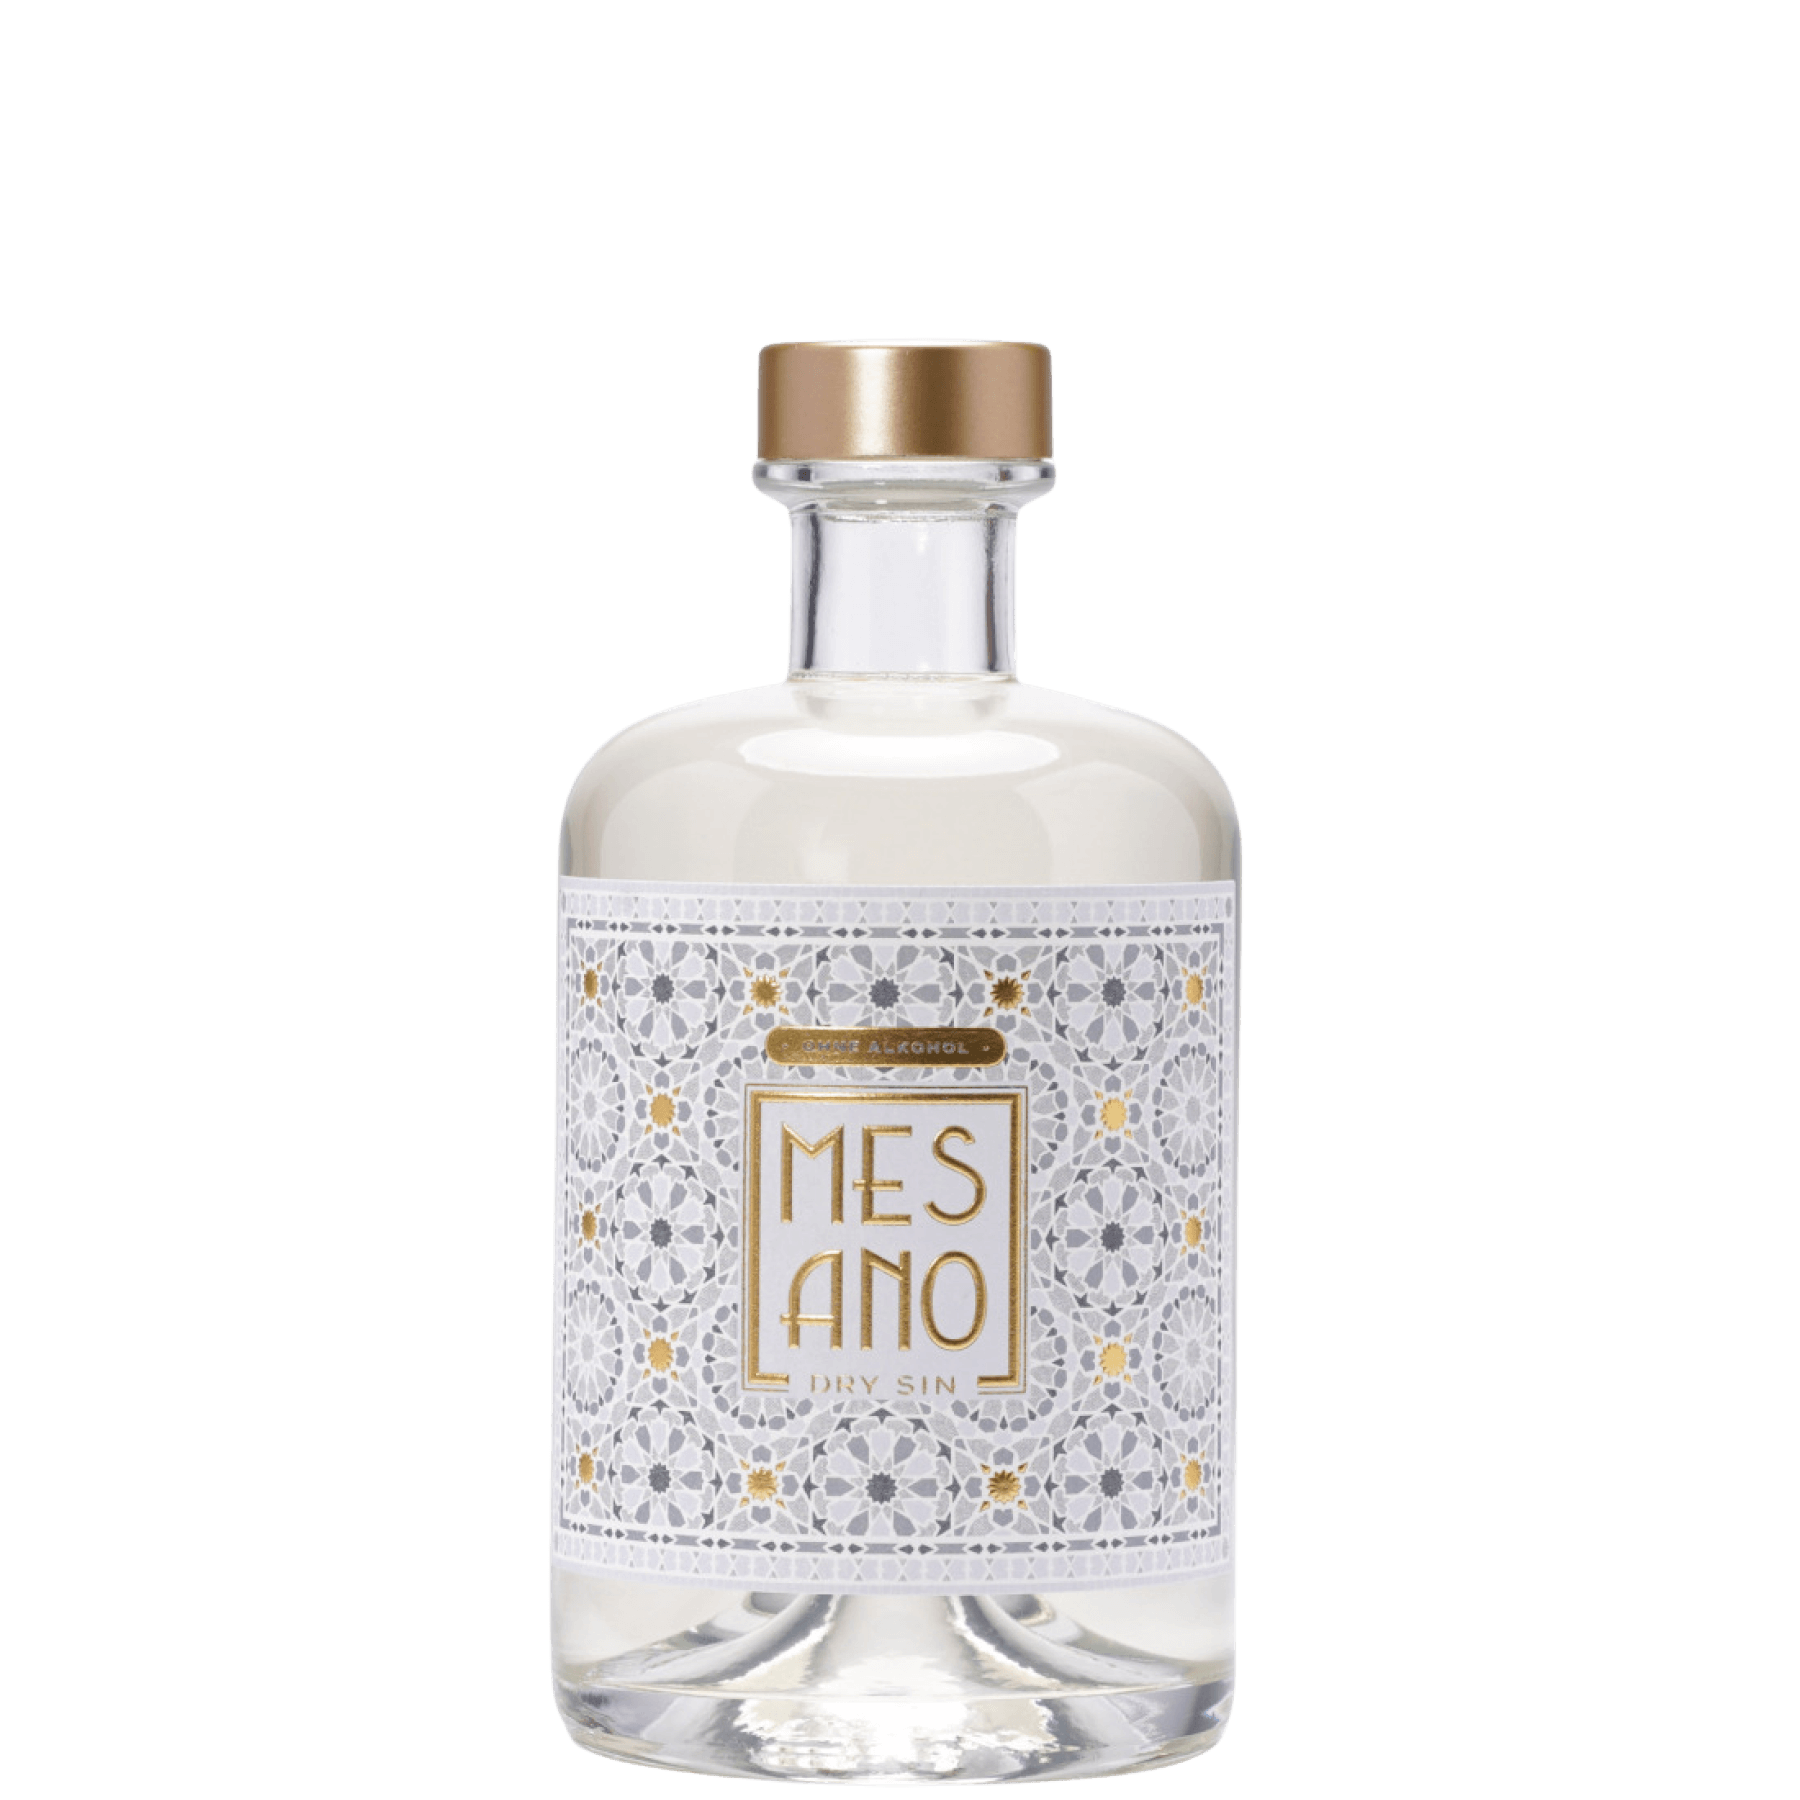 Mesano Dry Sin Gin Alternative ohne Alkohol 500 ml